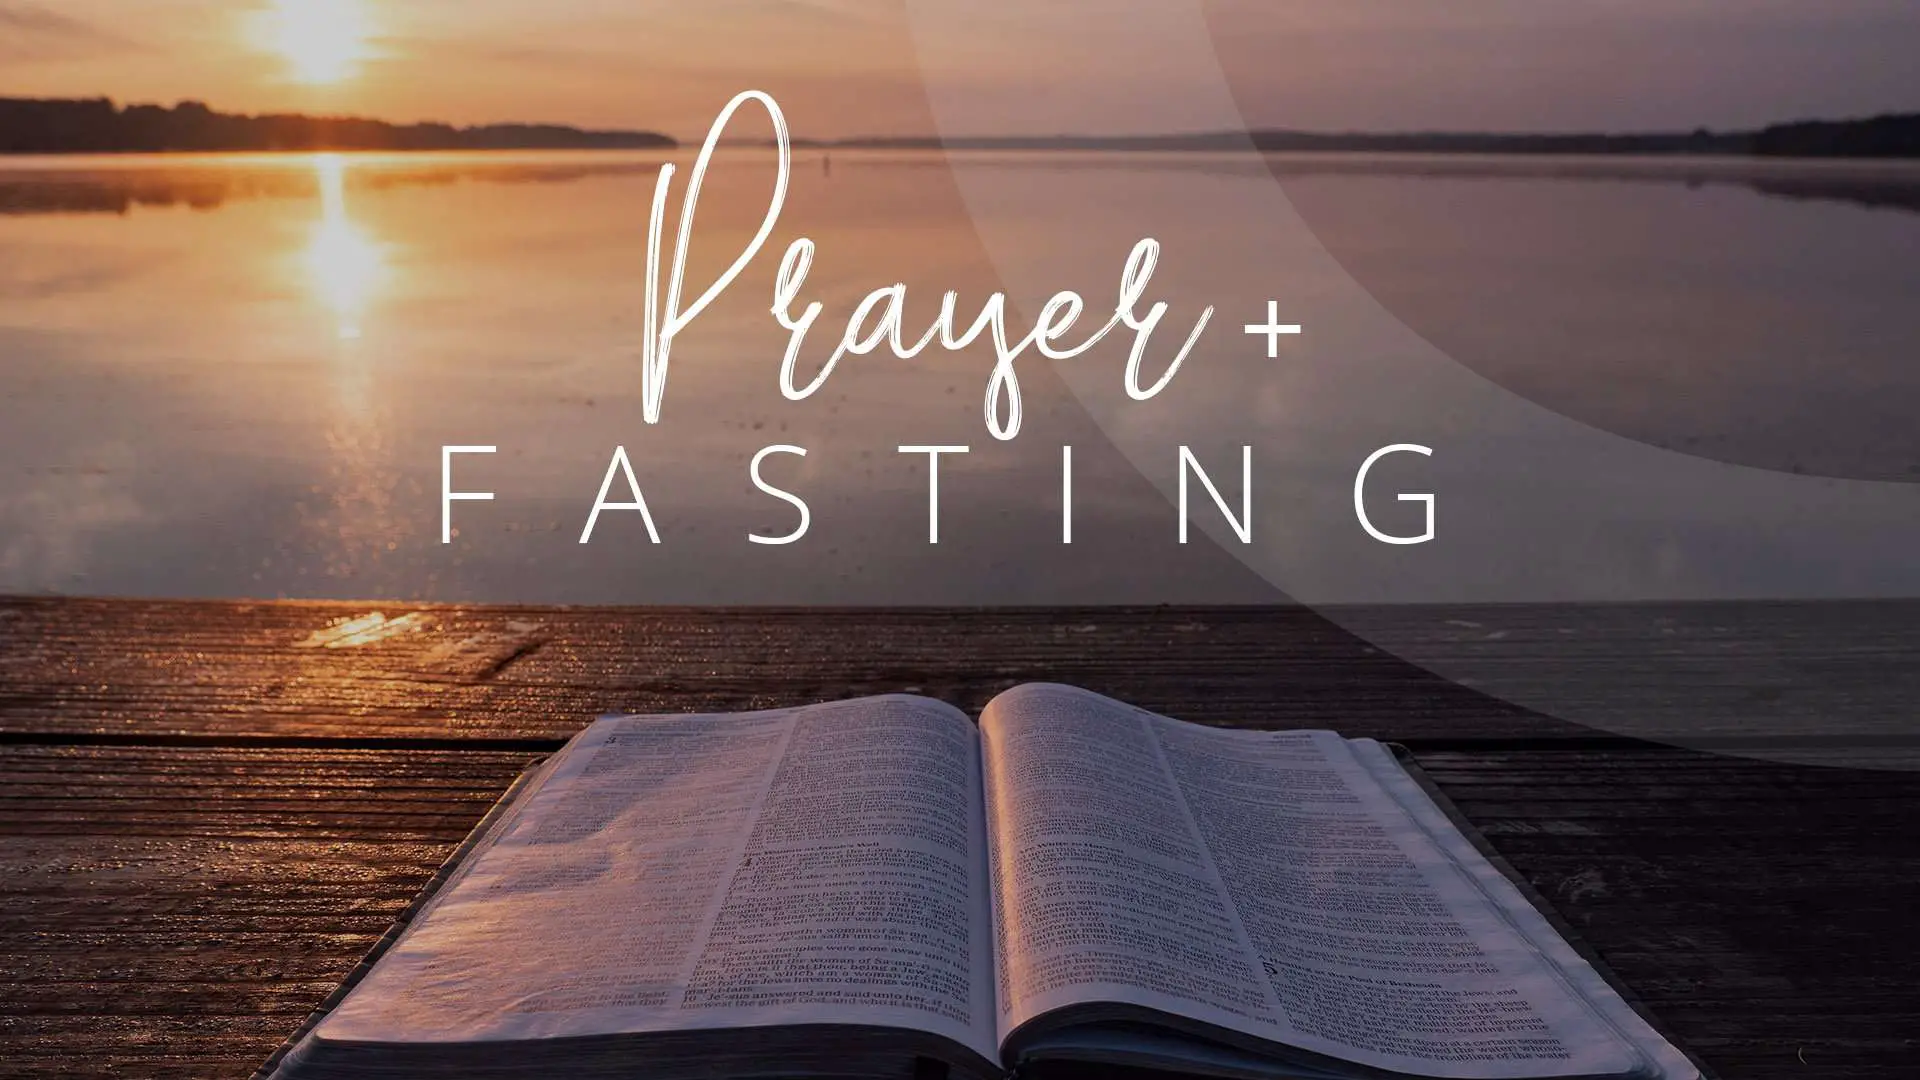 Media Prayer and Fasting 1920x1080